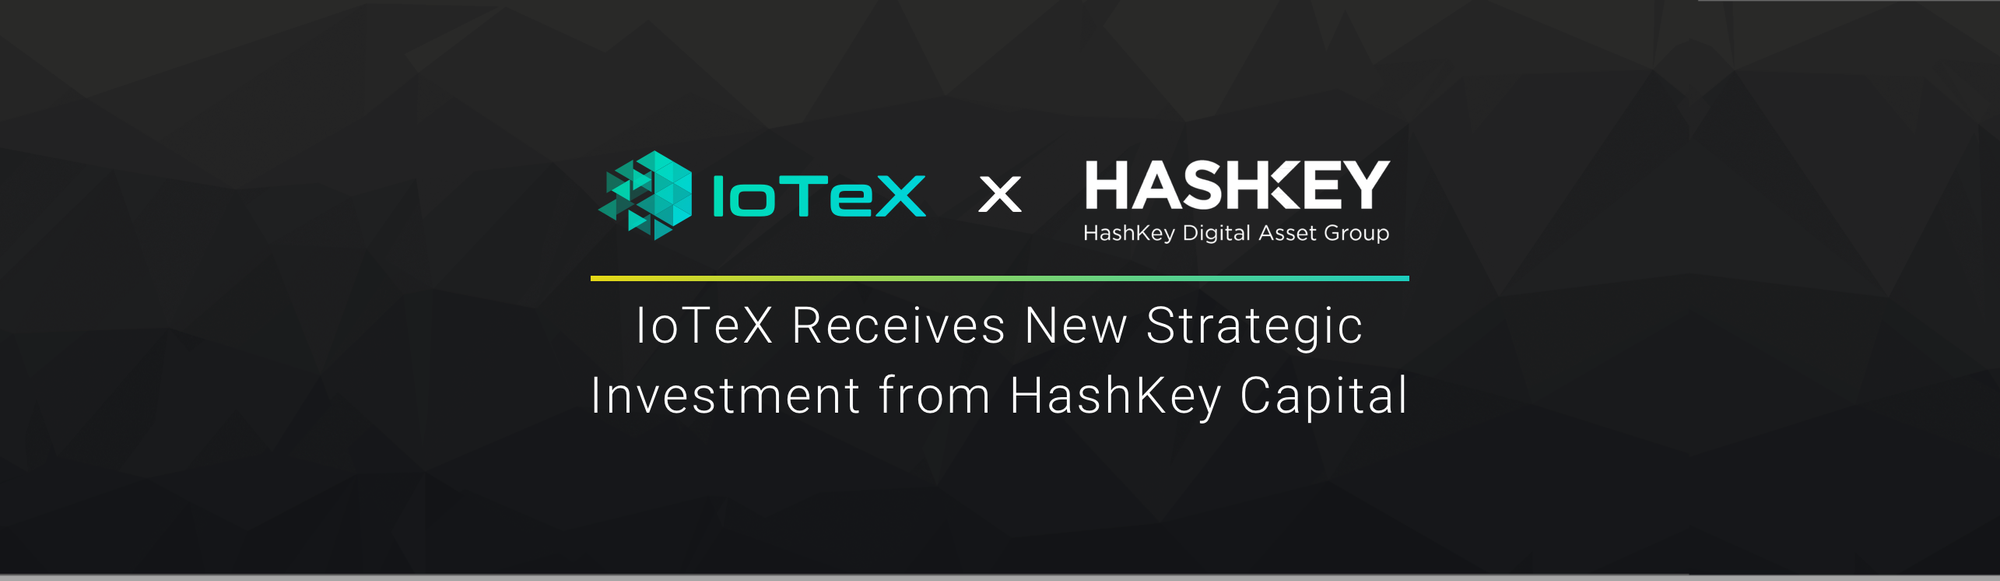 IoTeX Receives New Strategic Investment from HashKey Capital